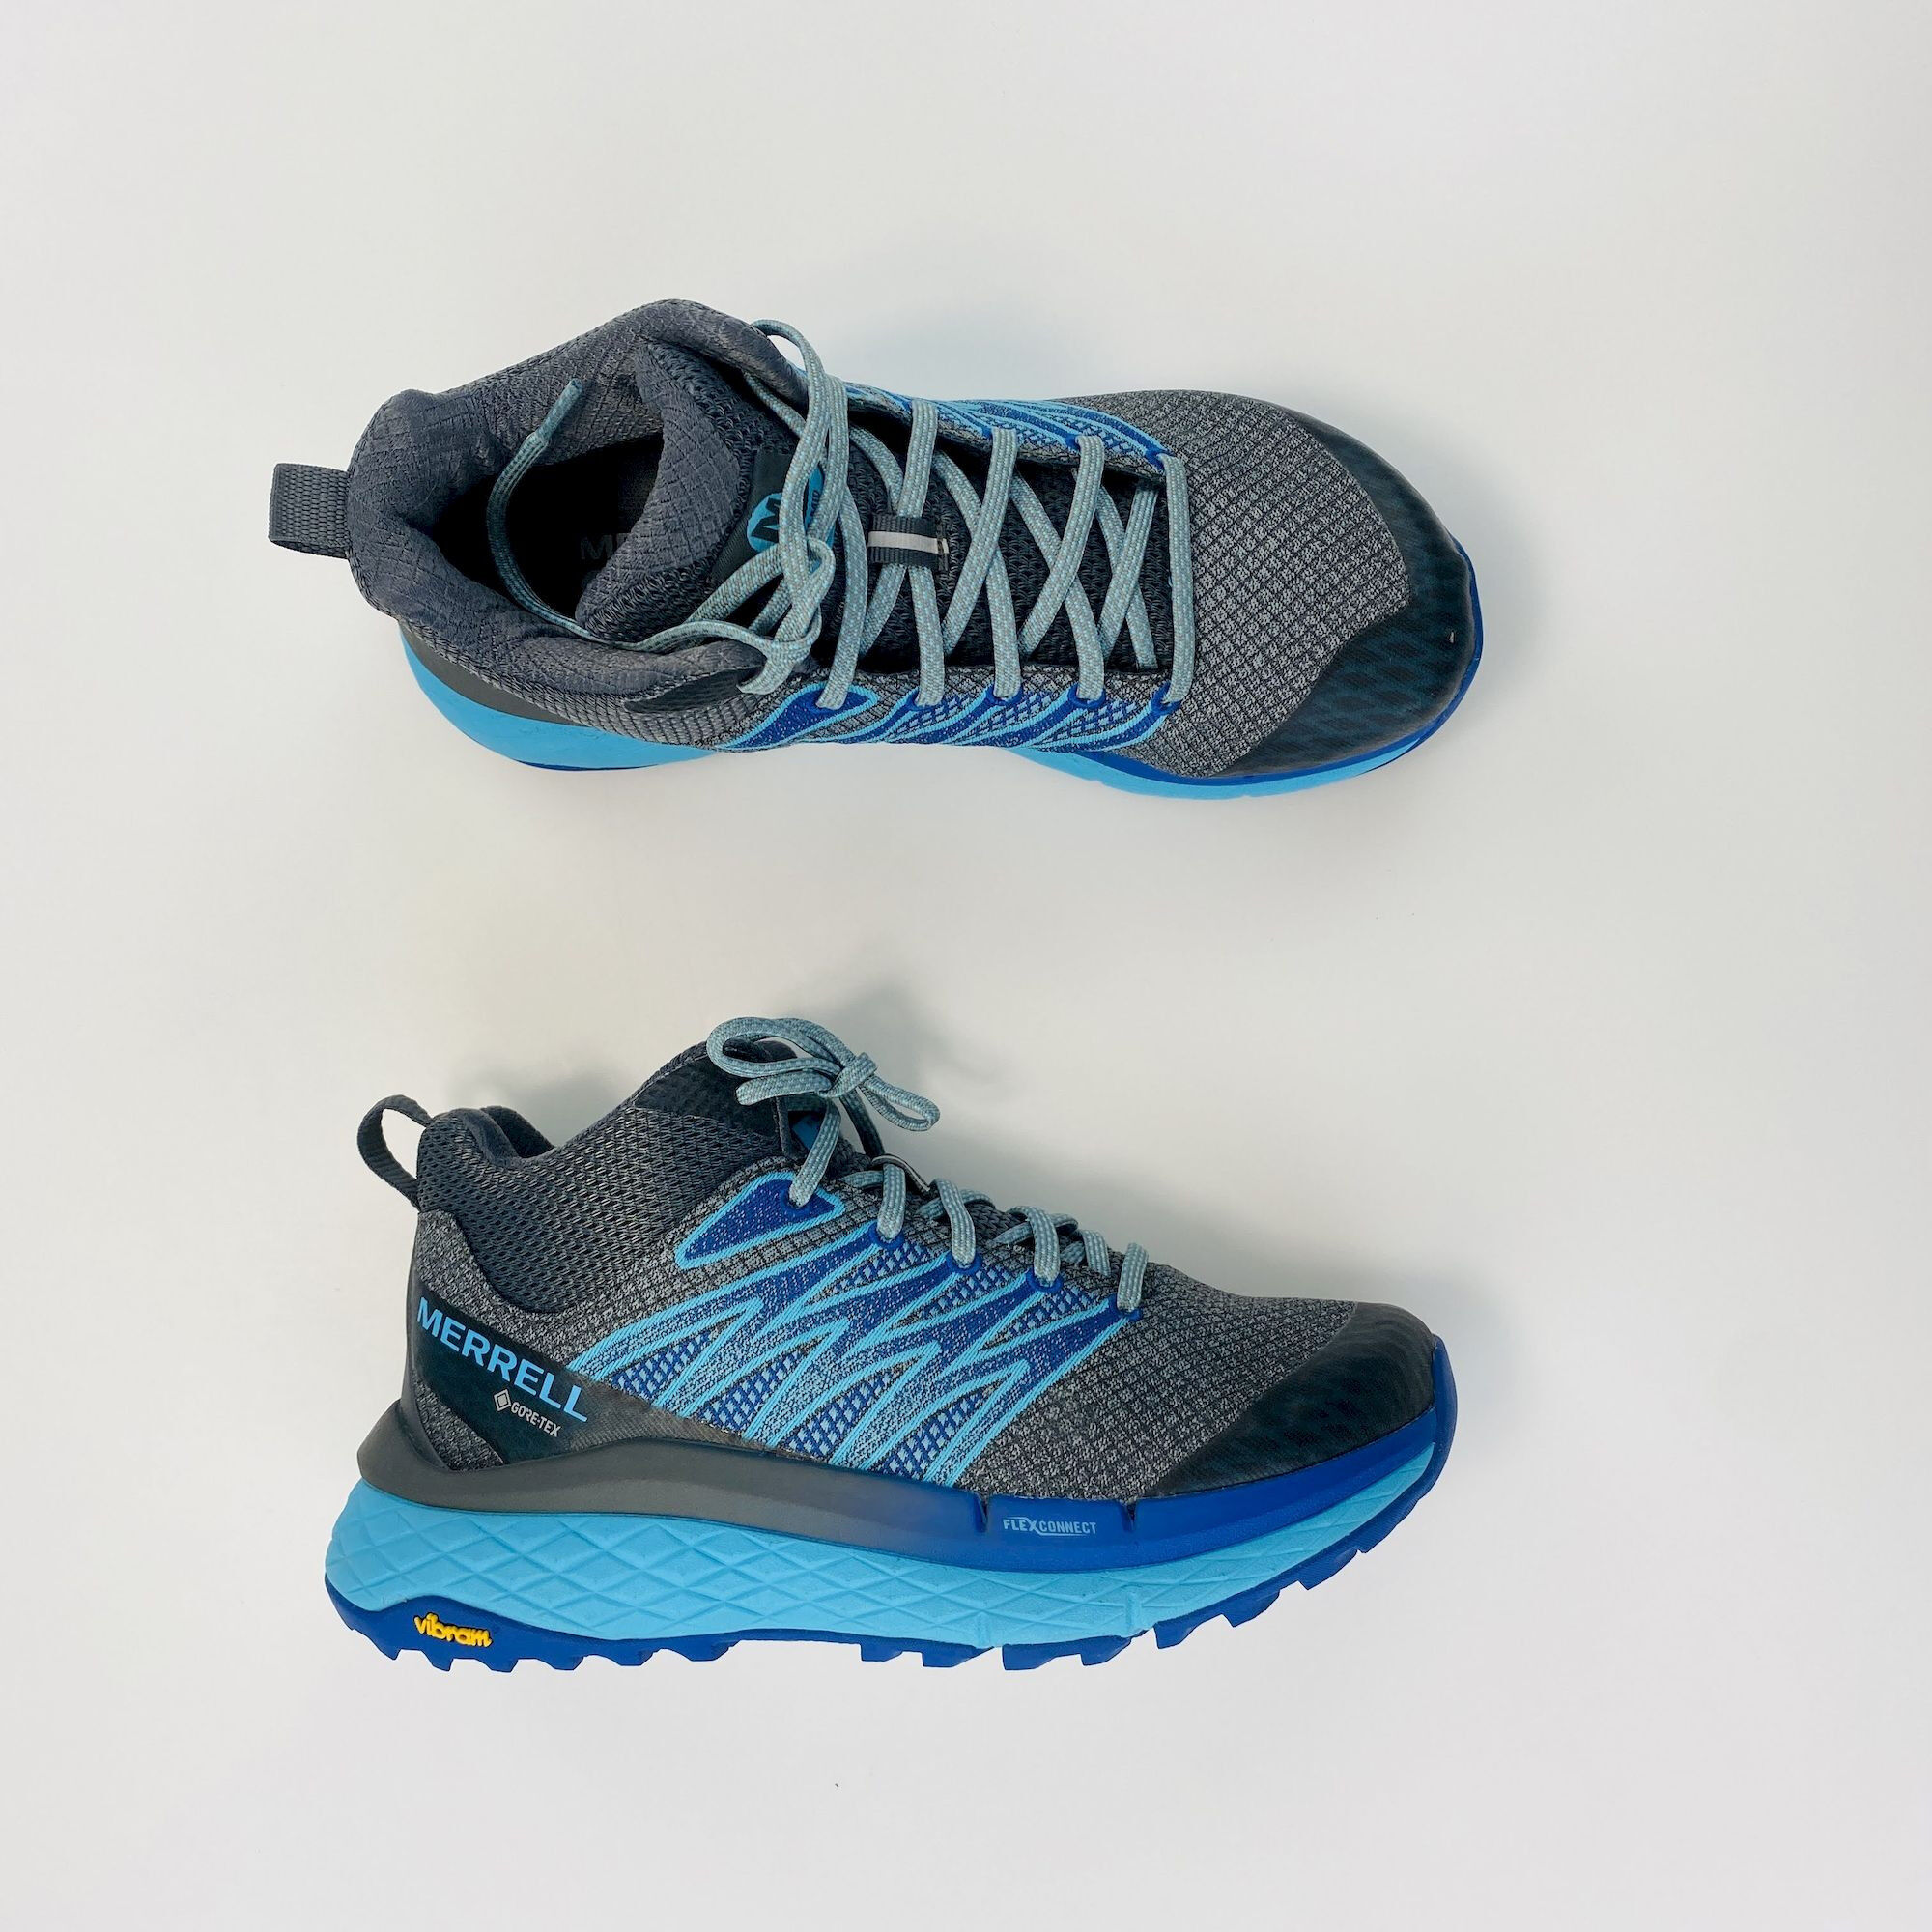 Merrell Chaussures randonnée Mid - Scarpe da trekking di seconda mano - Donna - Gris/Bleu - 37.5 | Hardloop